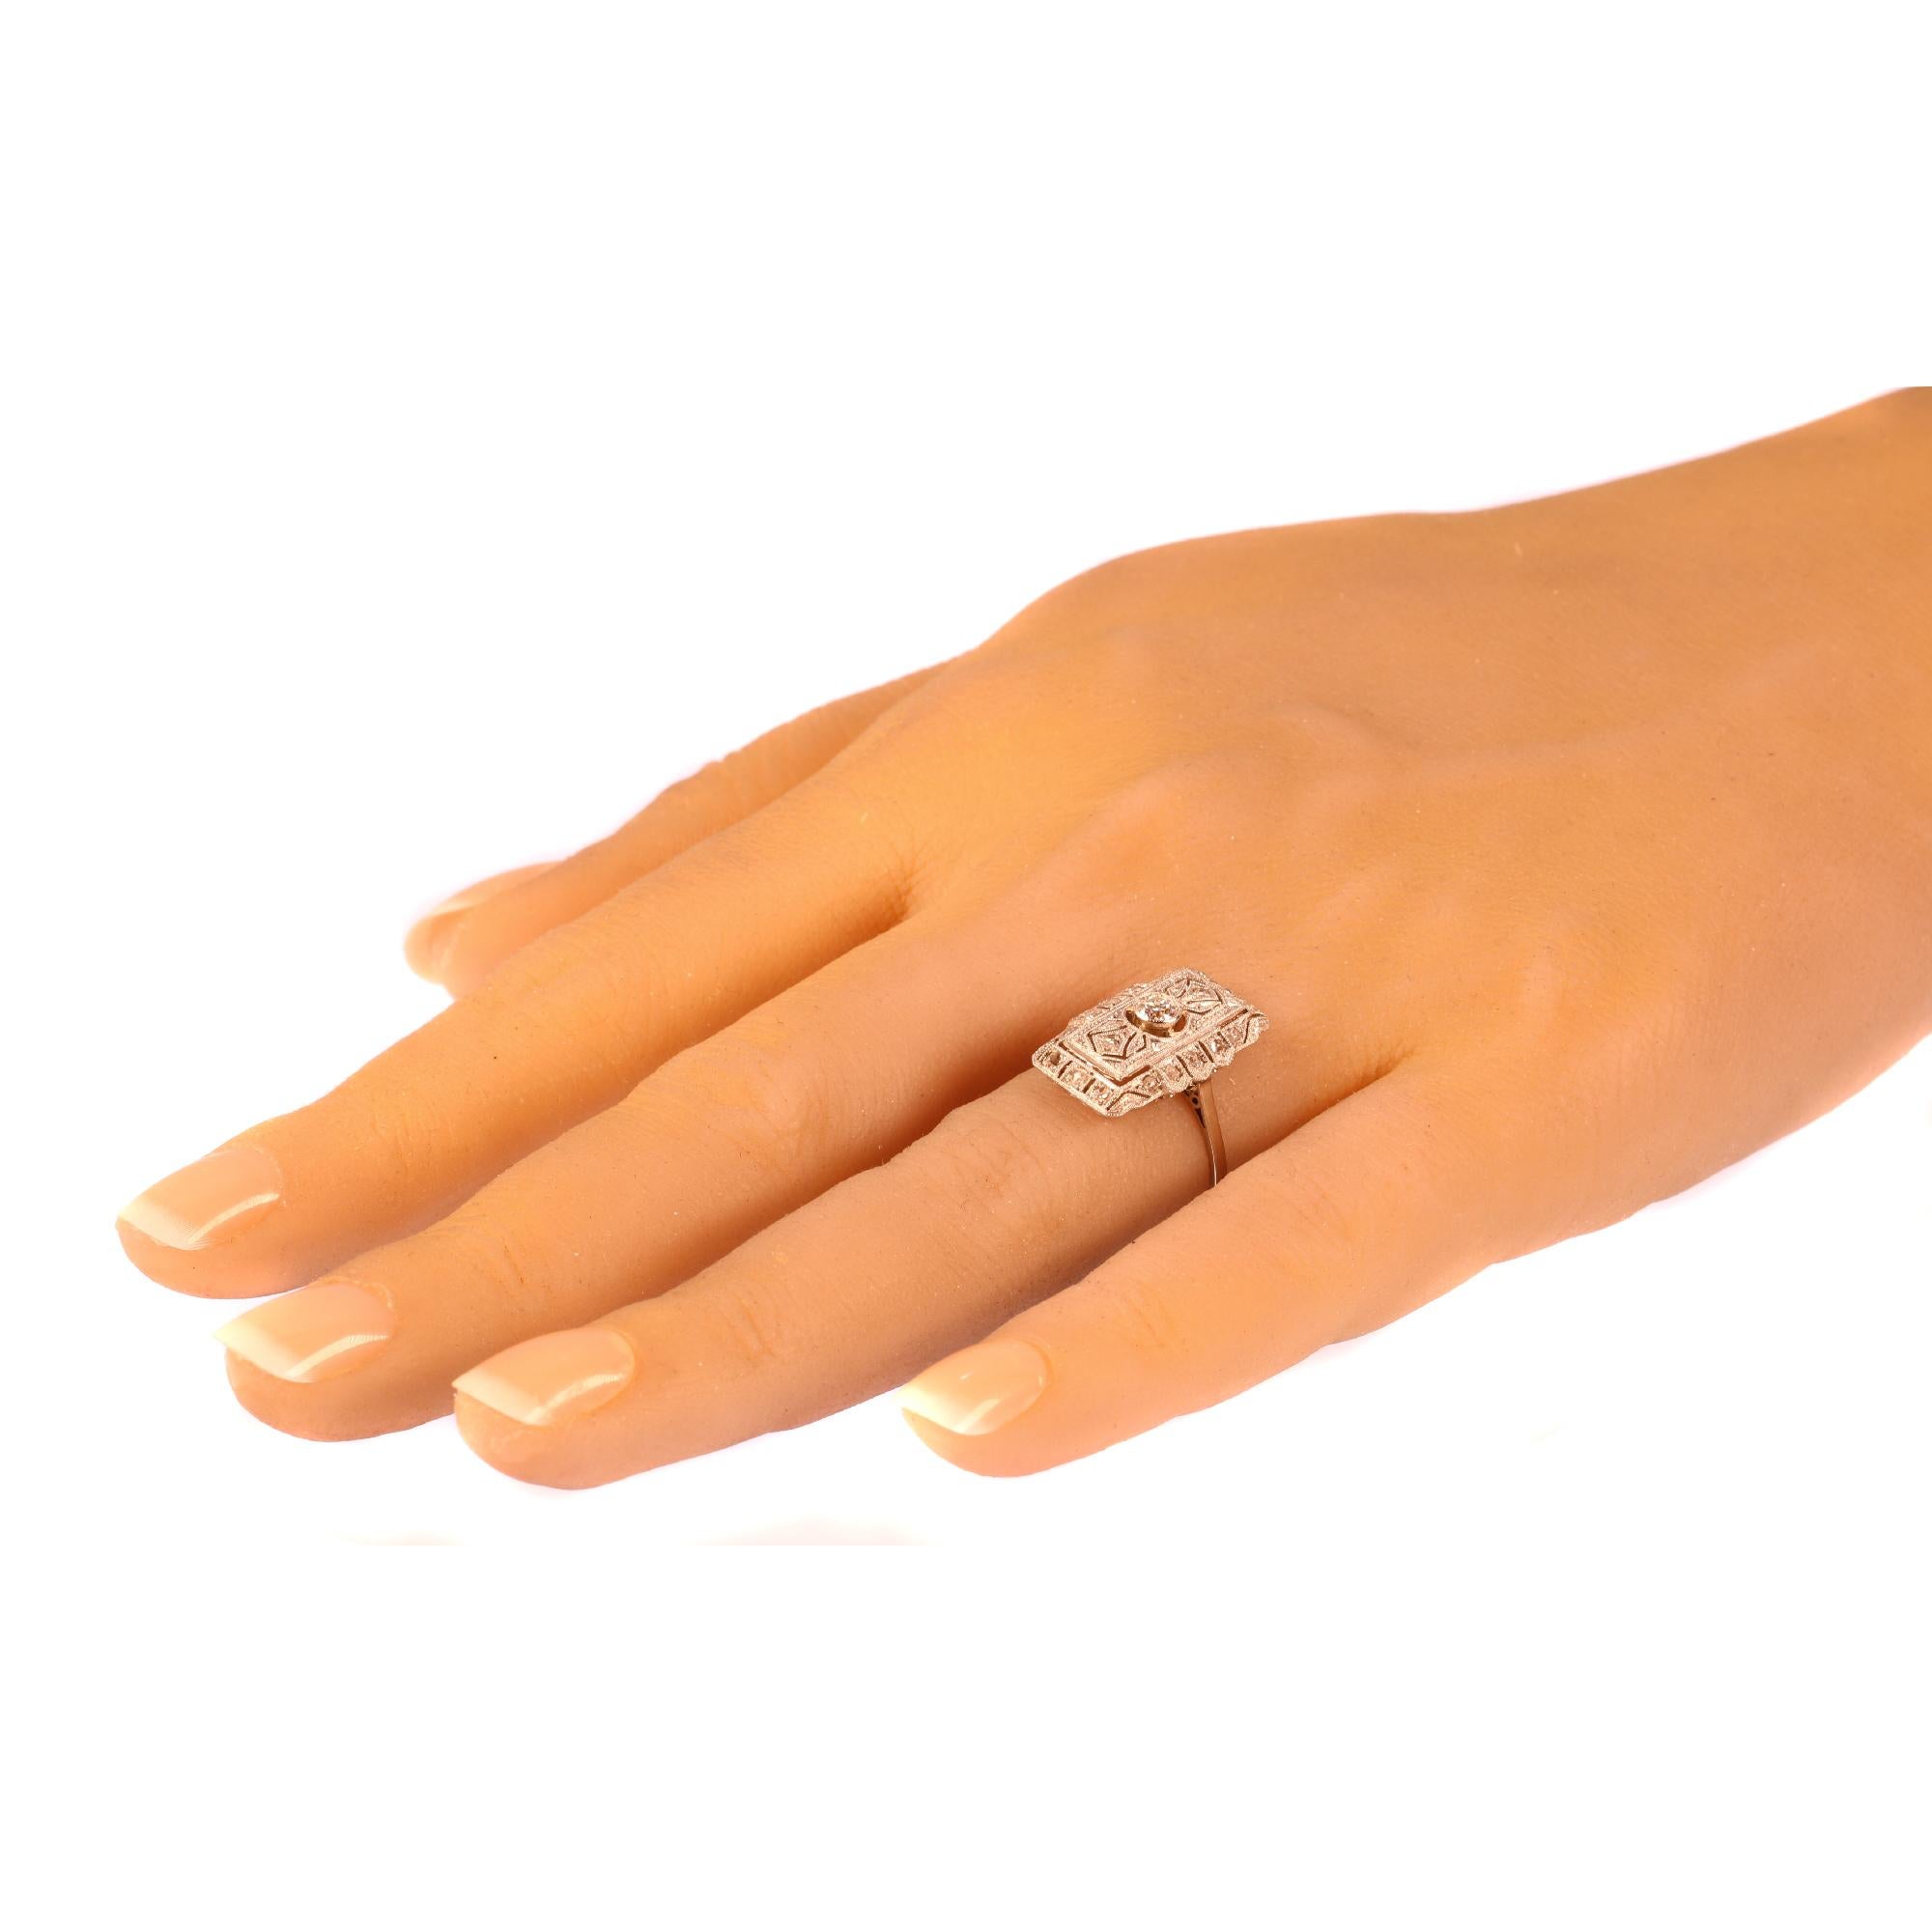  Edwardian Art Deco Diamond Engagement Ring For Sale 5